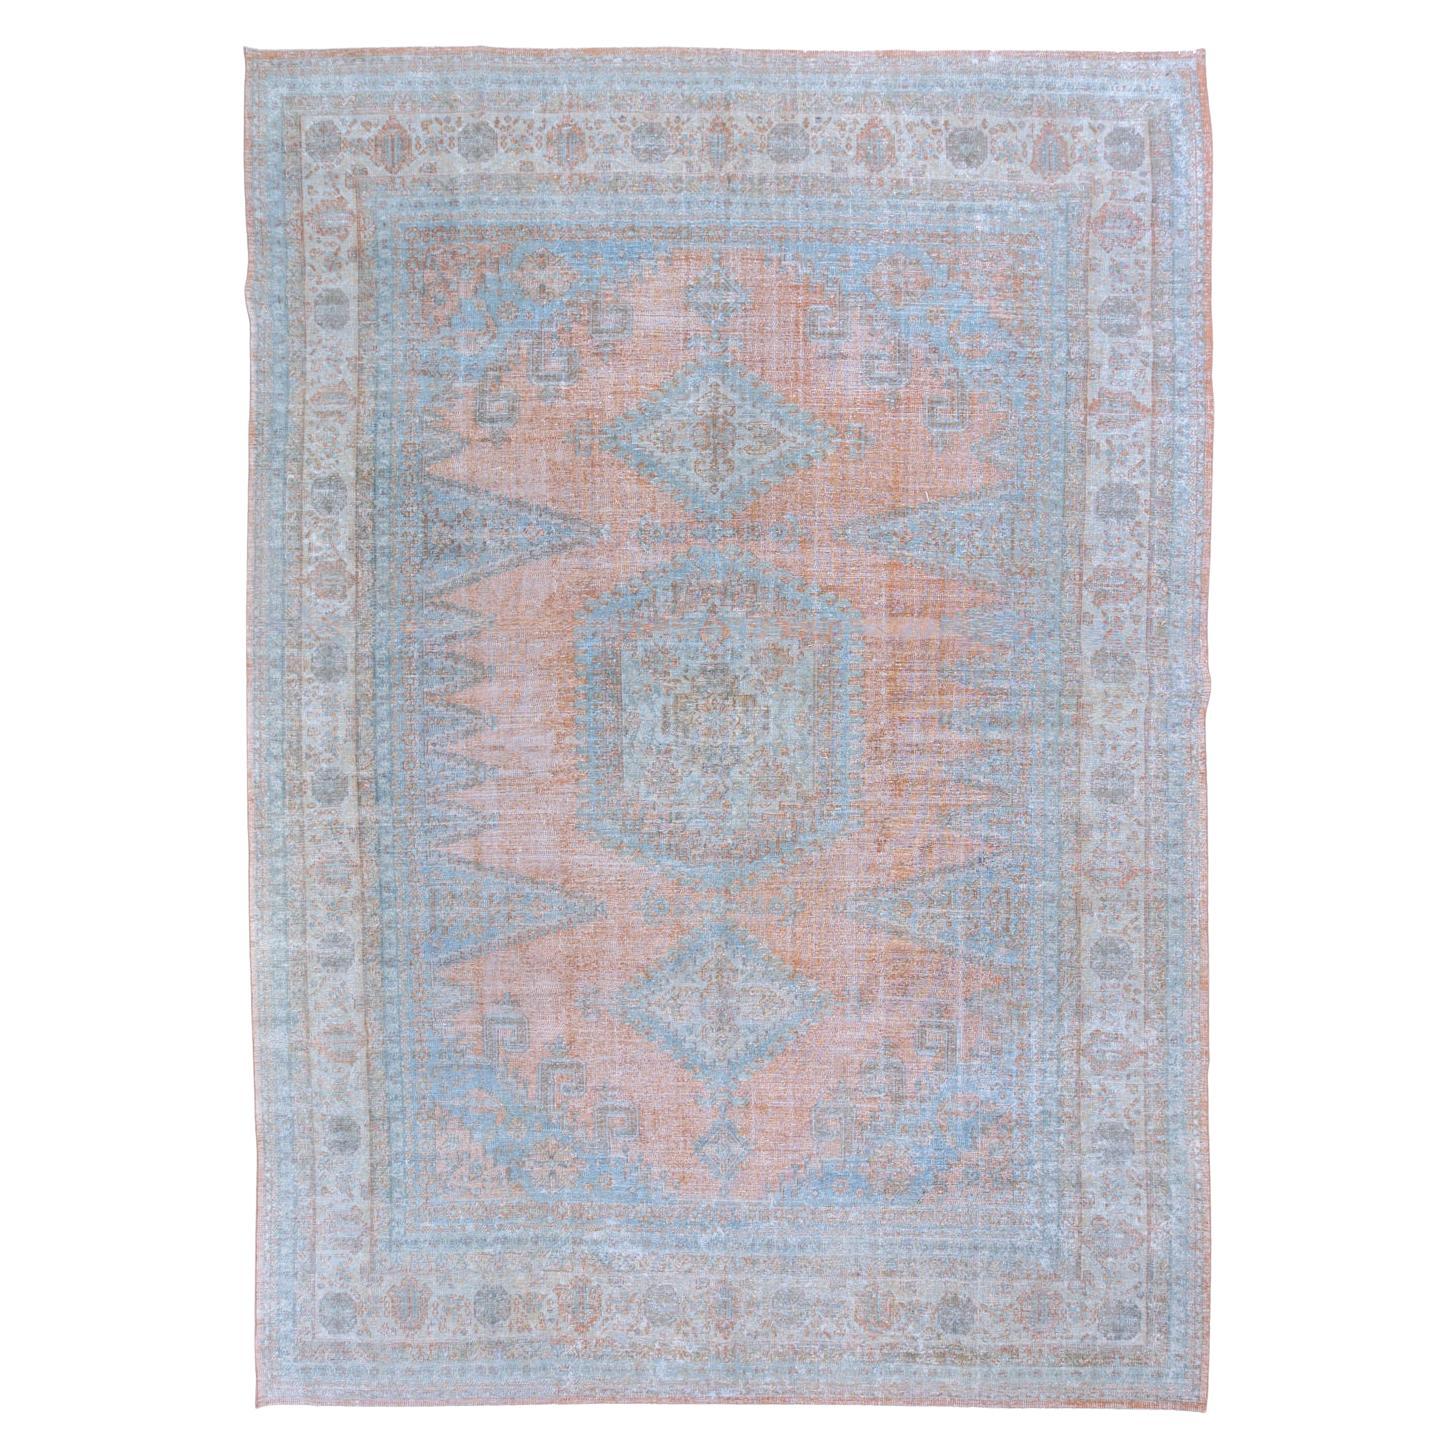 Persischer Mahal-Teppich aus Persien